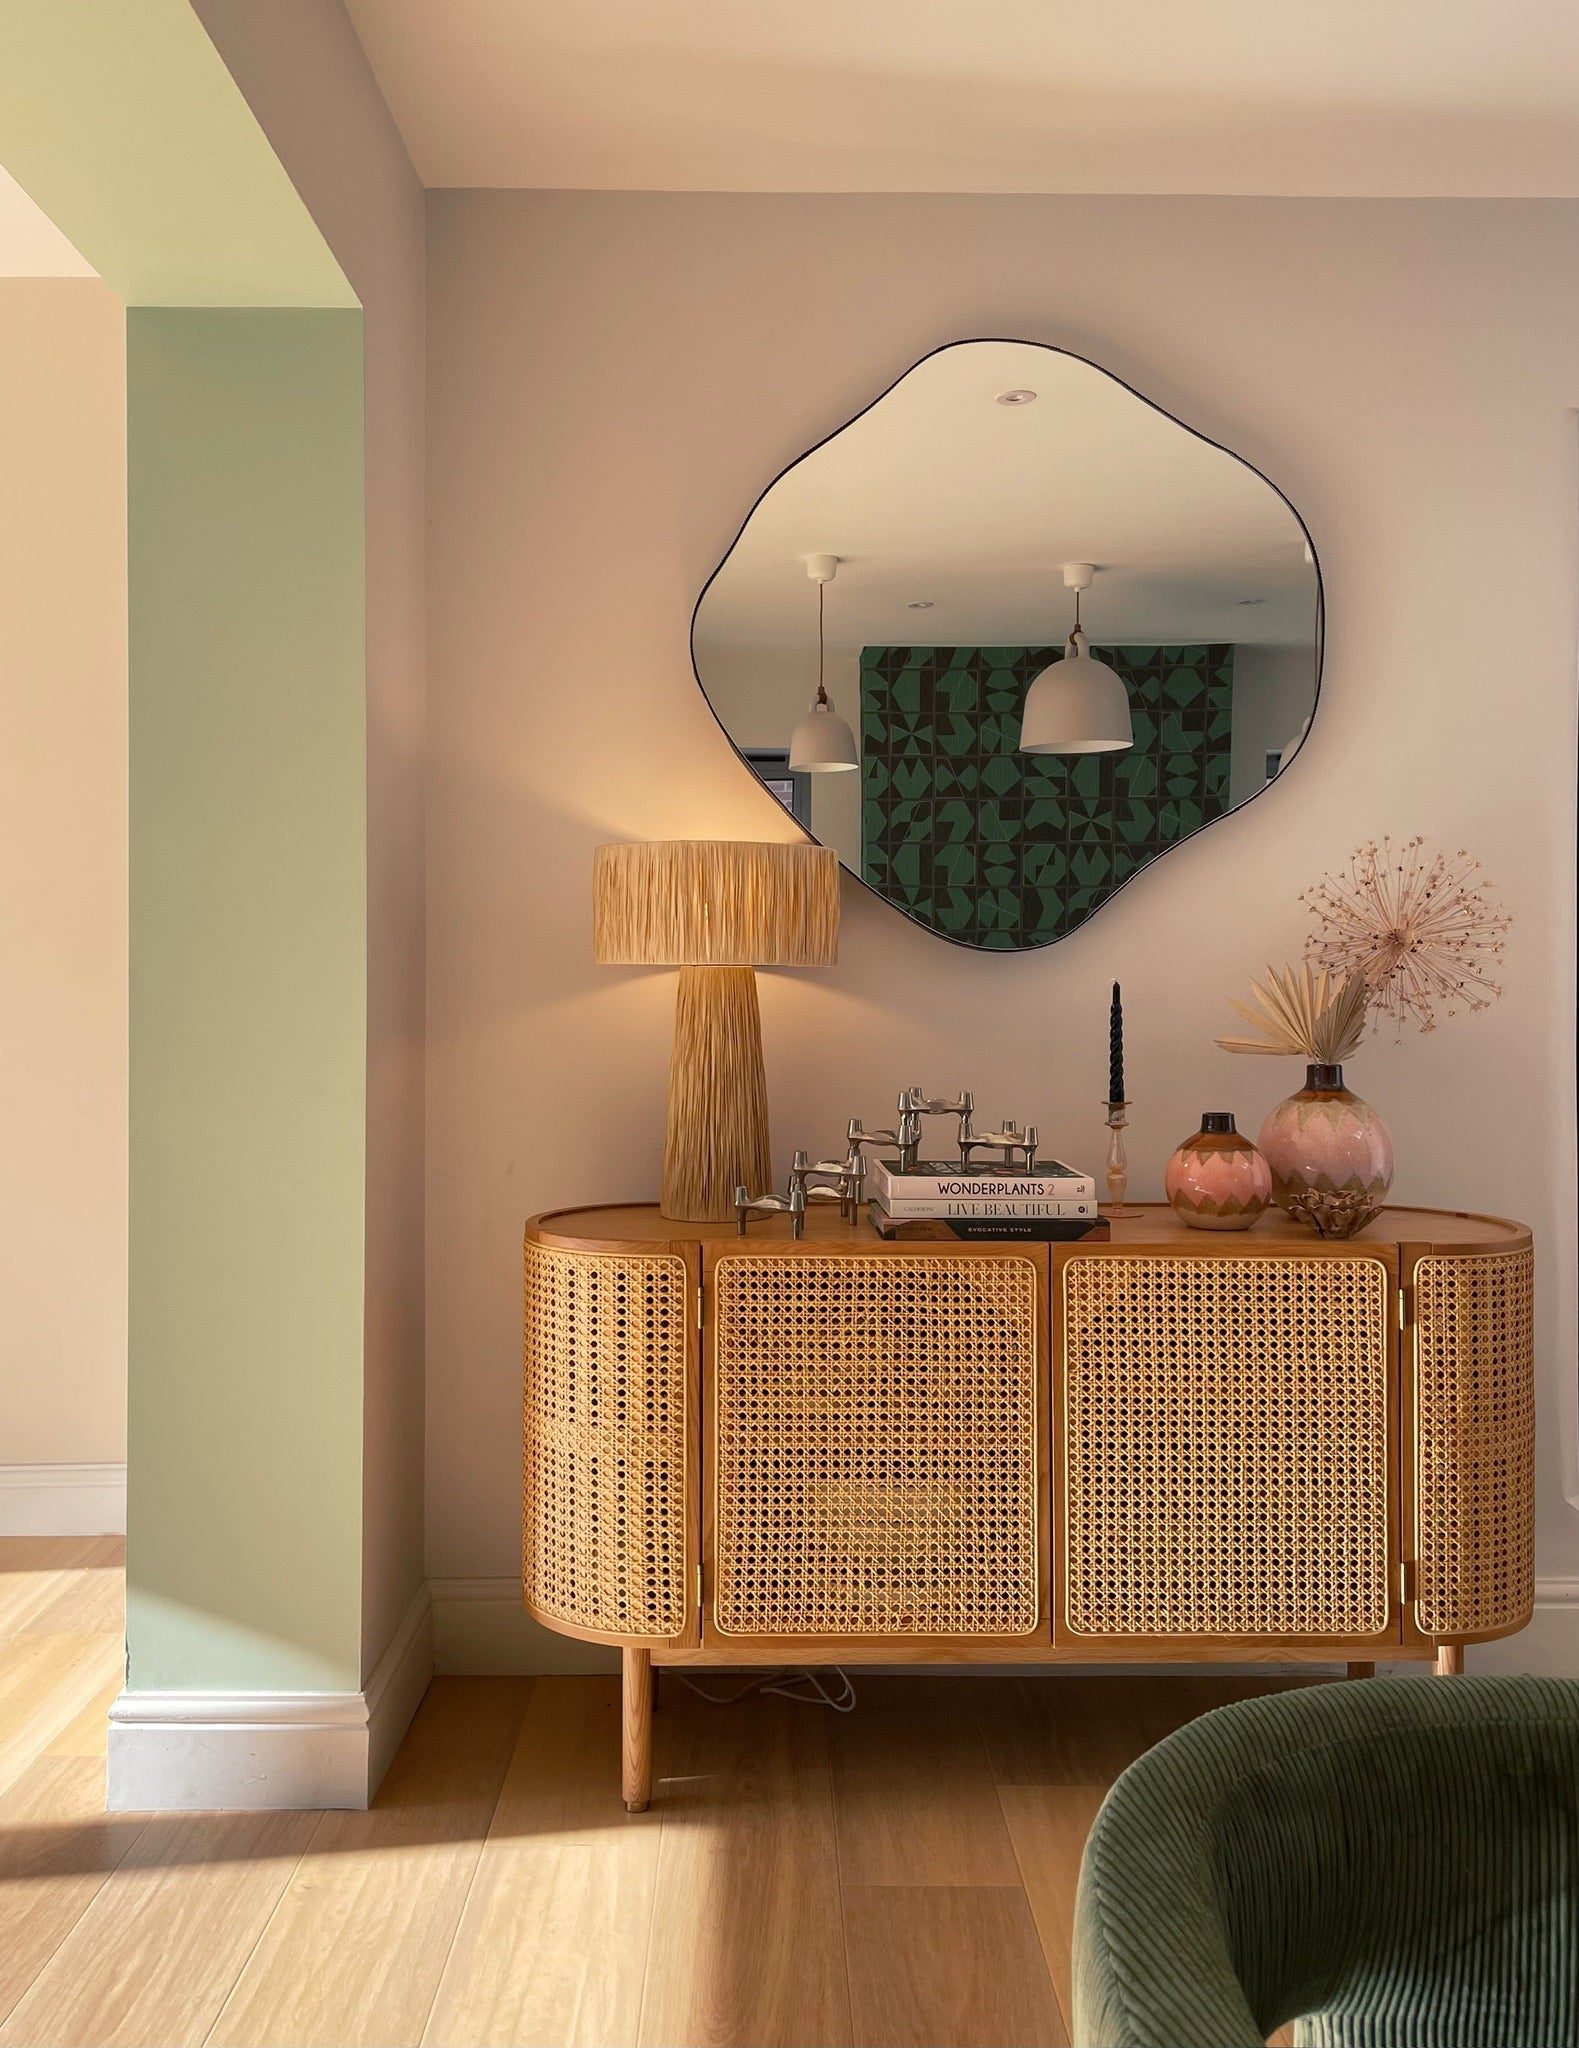 Interior design, contemporary furniture and mirror